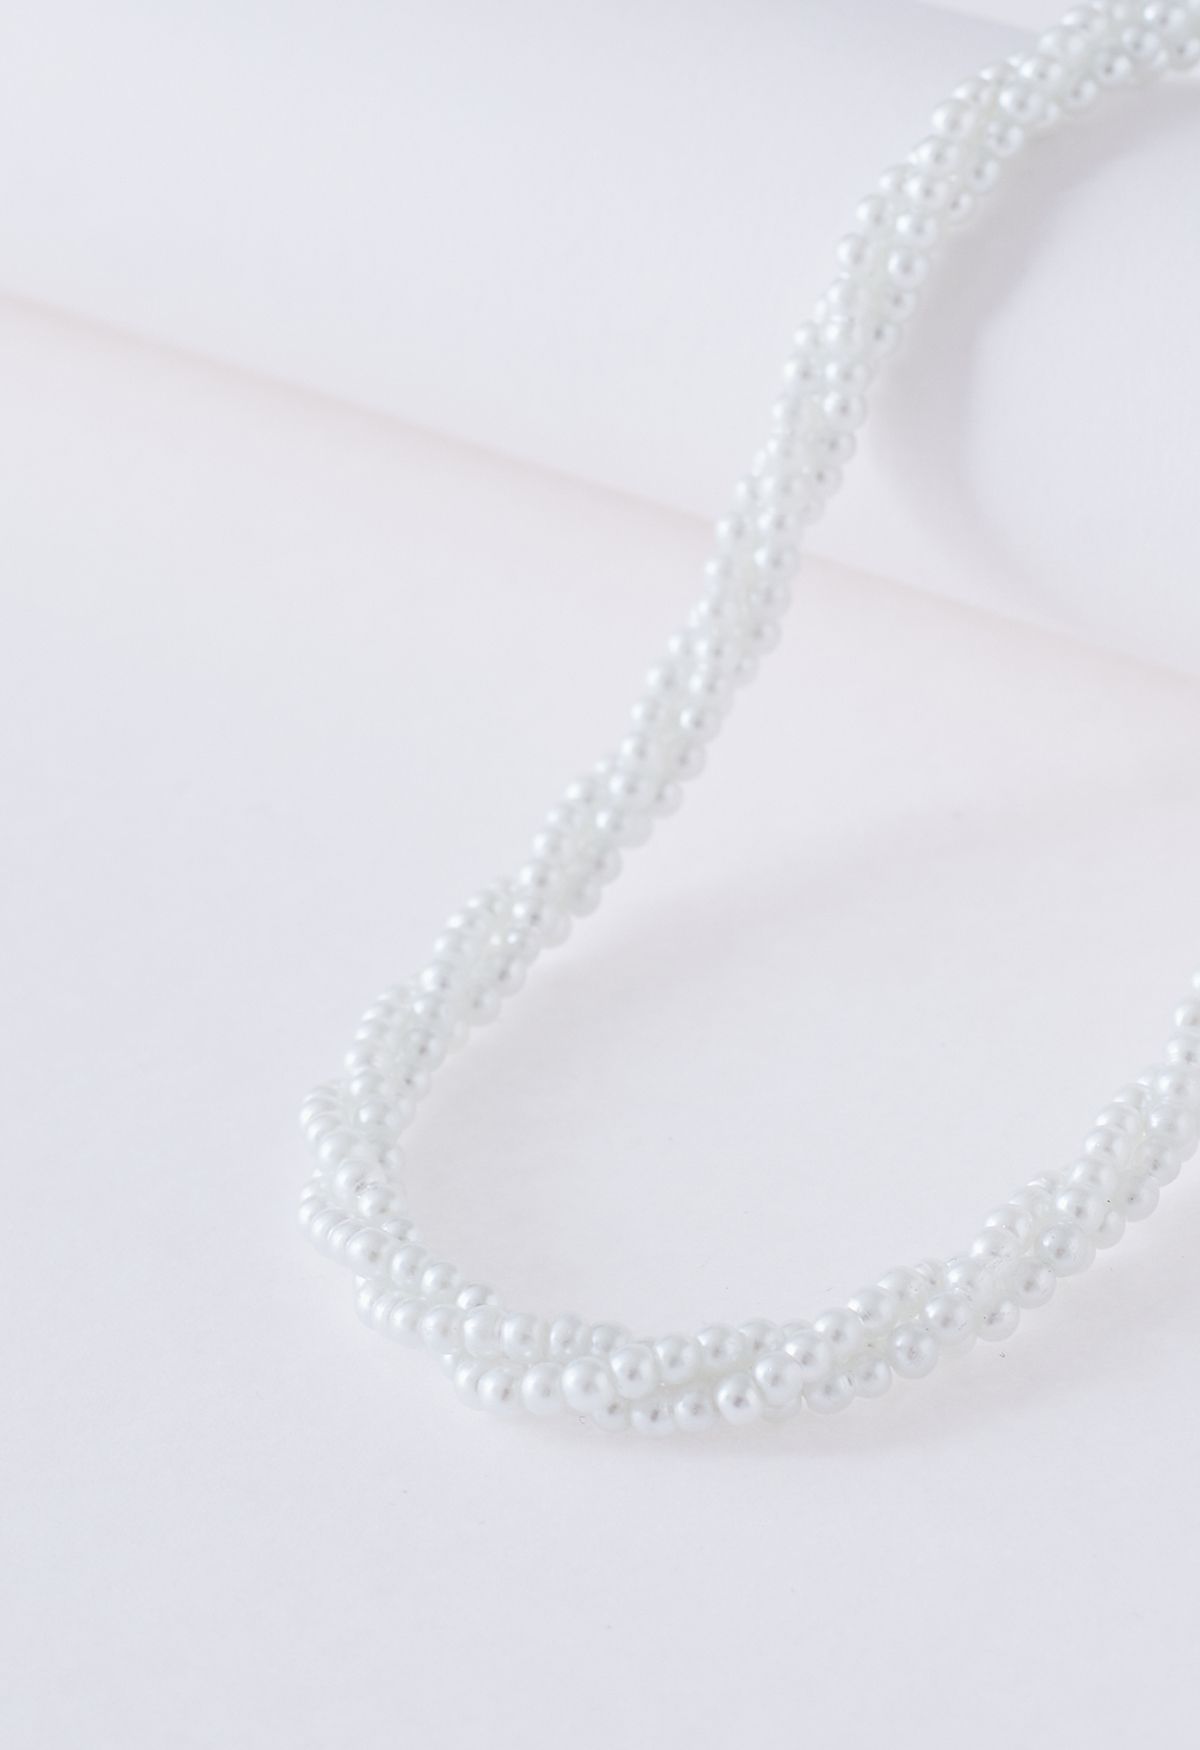 Multi-Layer Intertwine Pearl Necklace